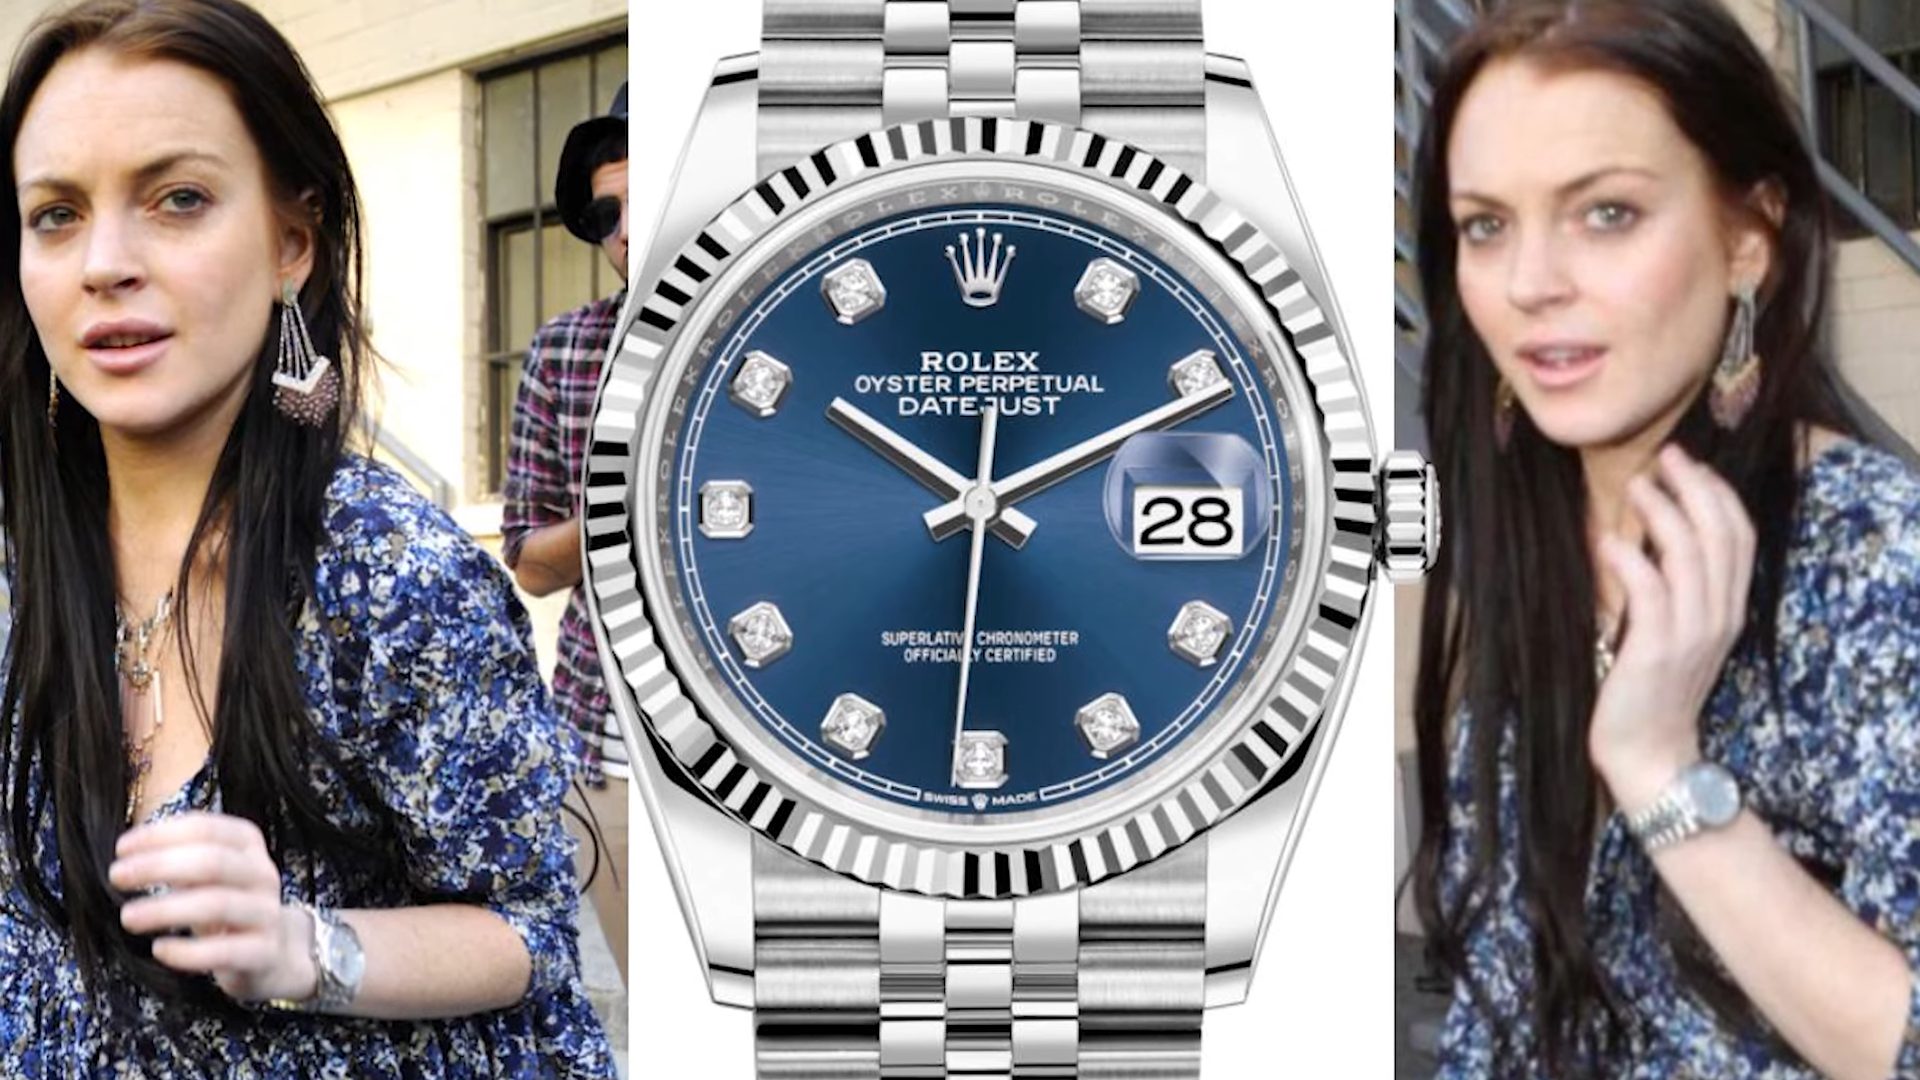 Lindsay Lohan wearing Rolex